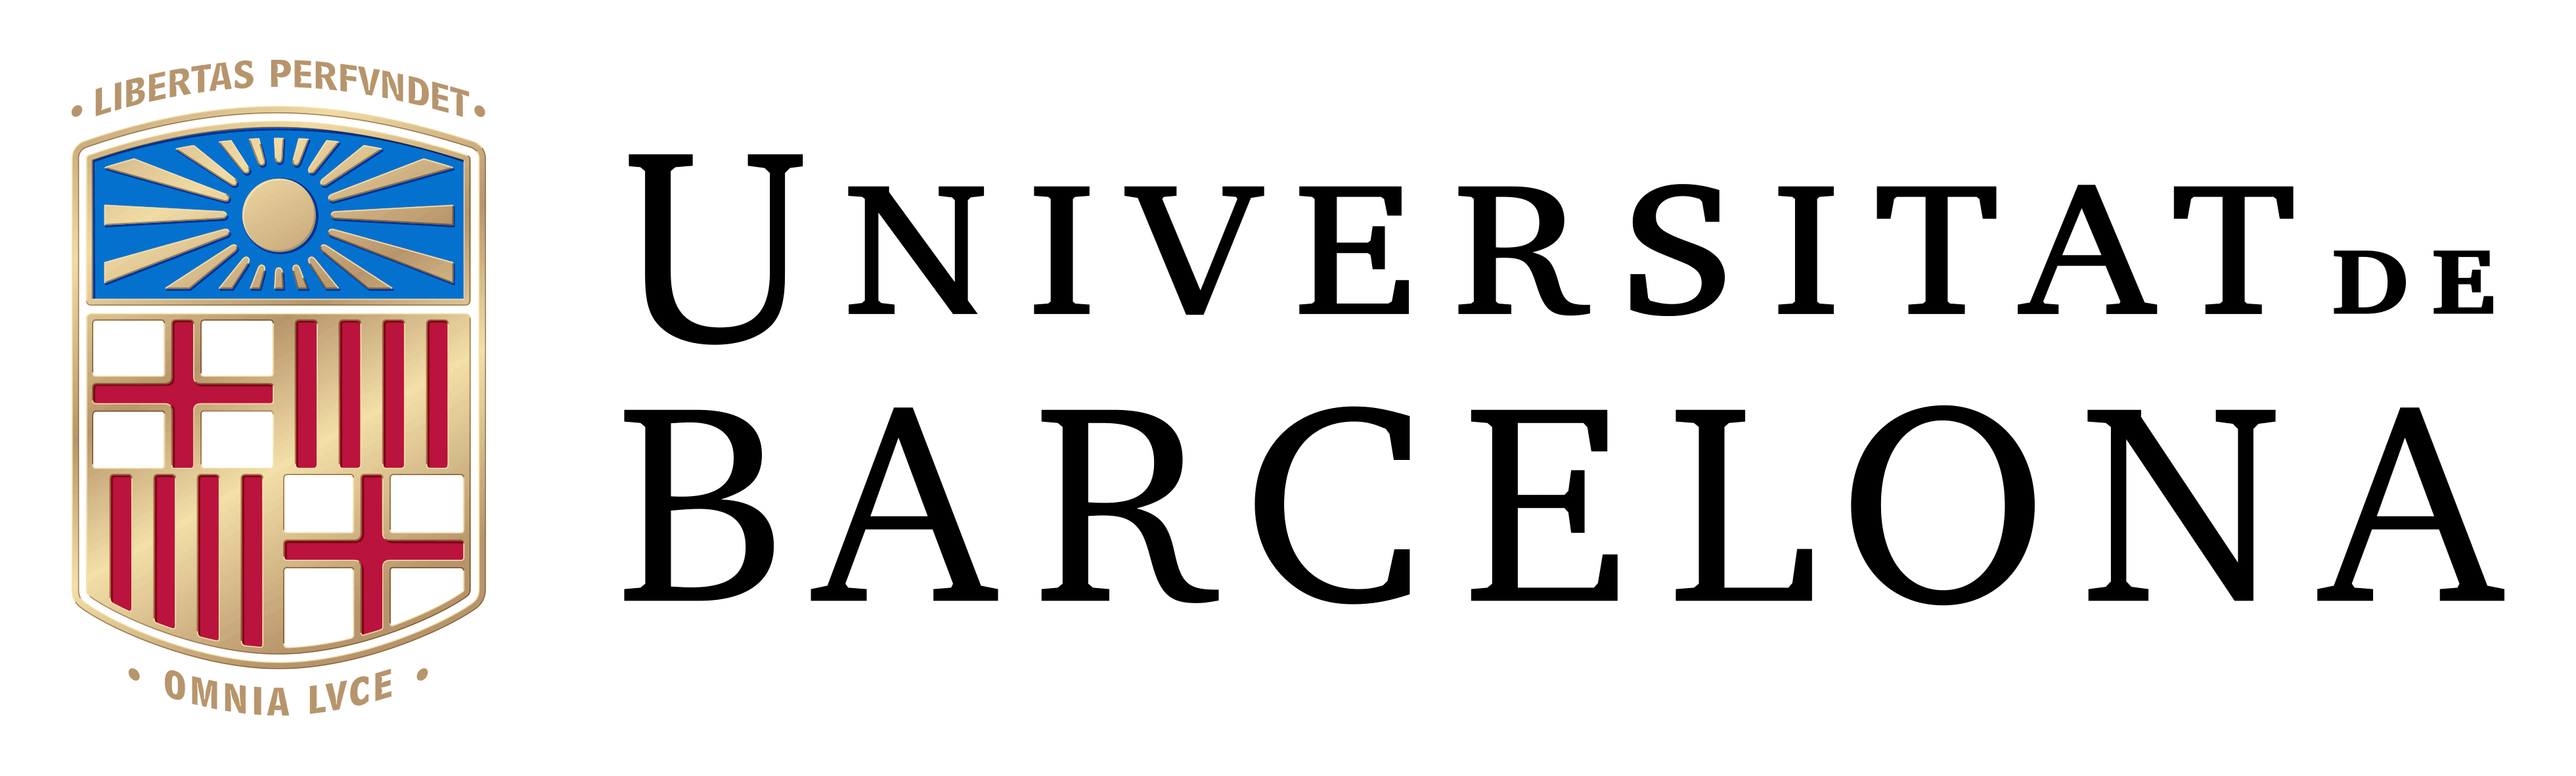 Ub logo